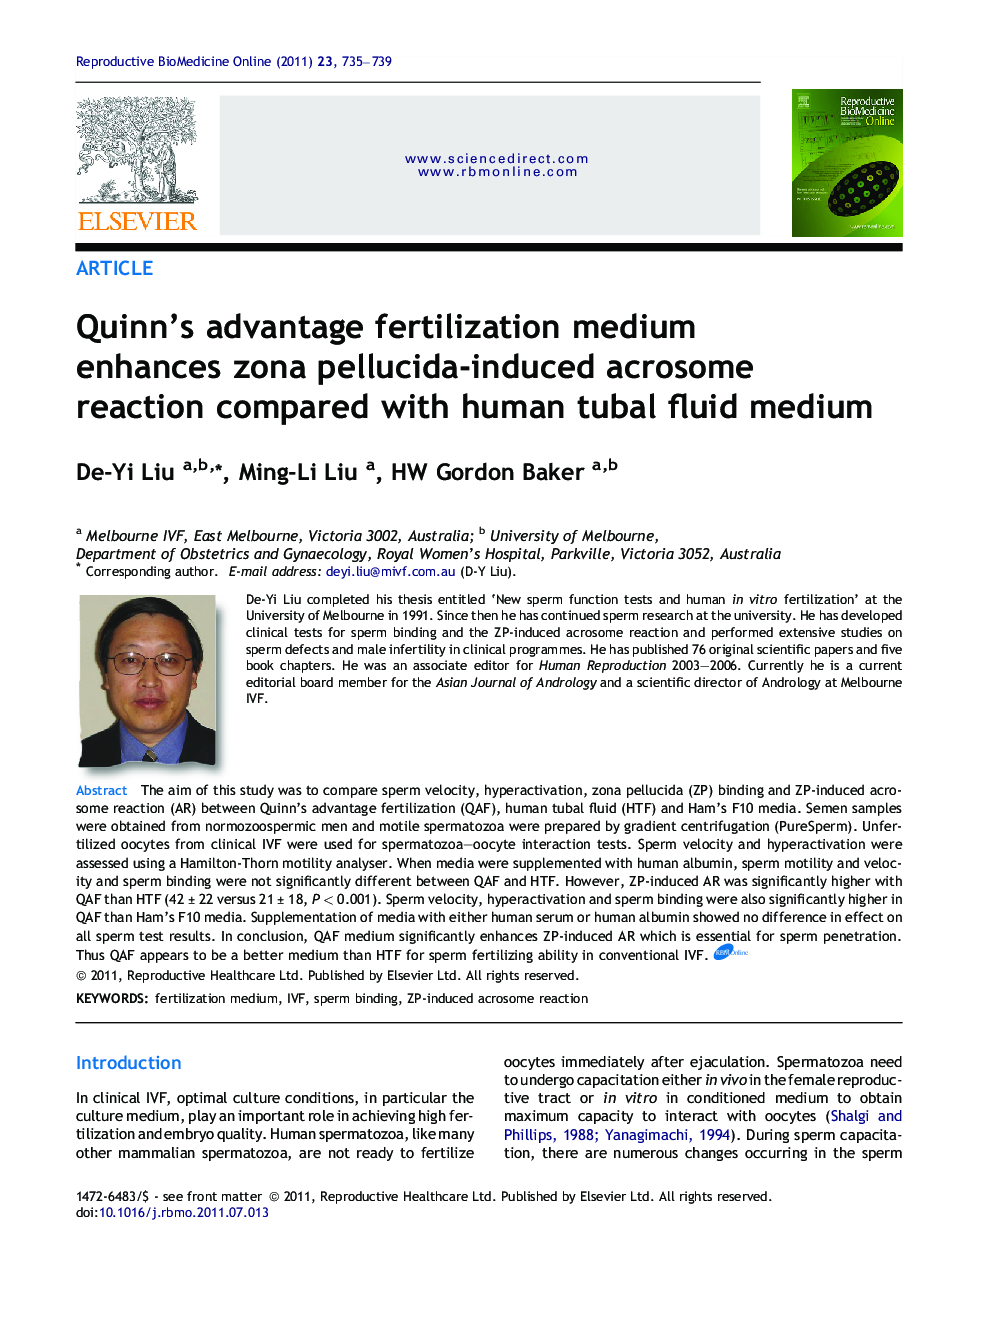 Quinn’s advantage fertilization medium enhances zona pellucida-induced acrosome reaction compared with human tubal fluid medium 